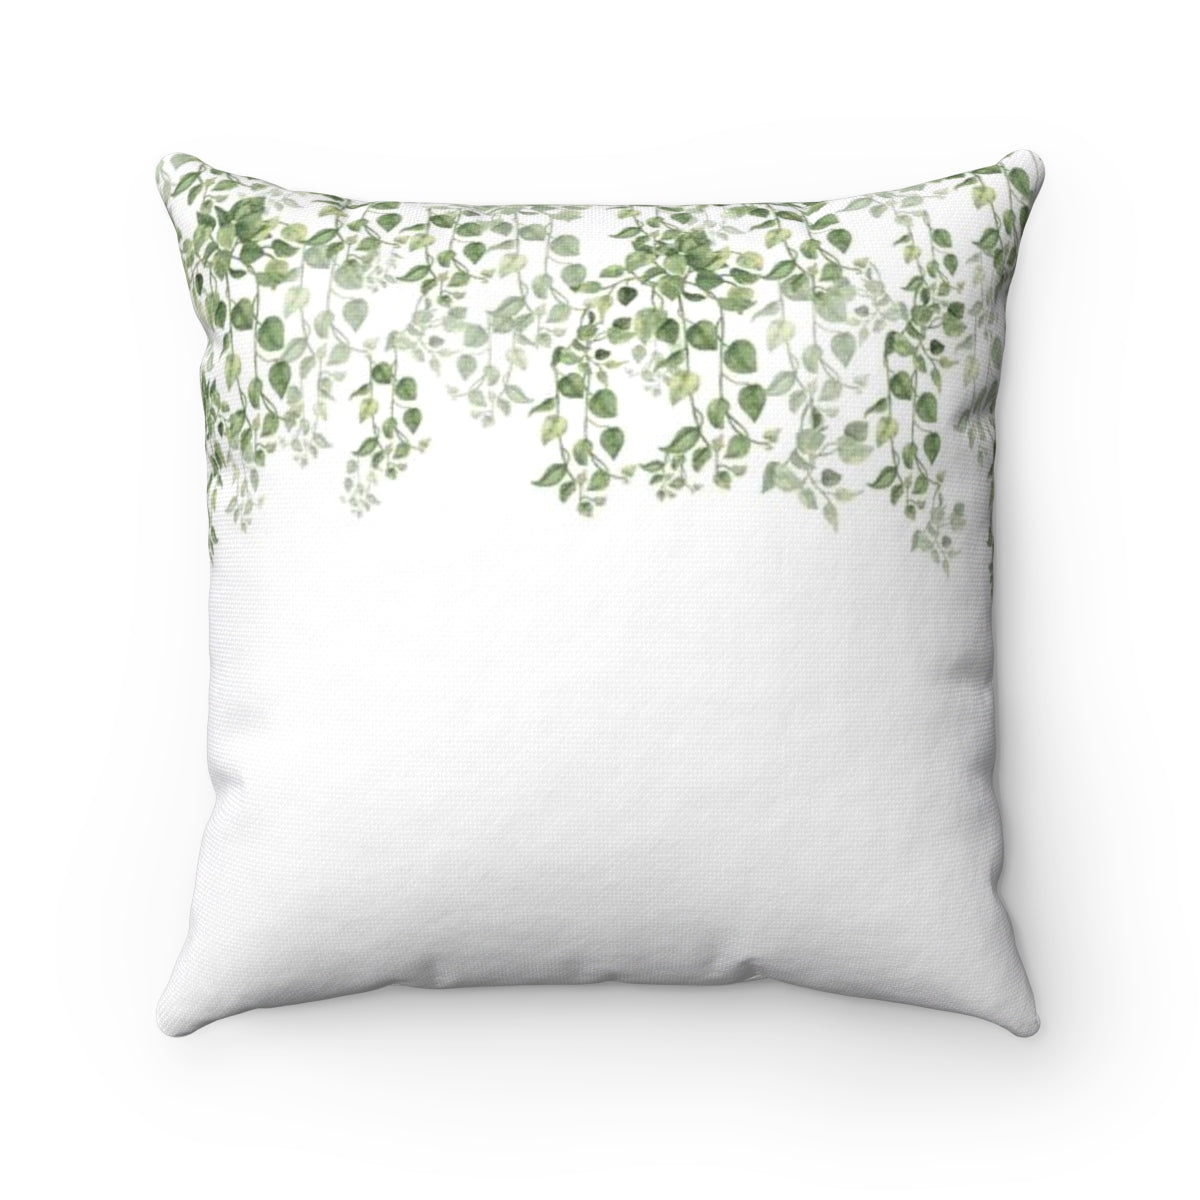 Minimalist Leaves Throw Pillows - Liz Kapiloto Art & Design